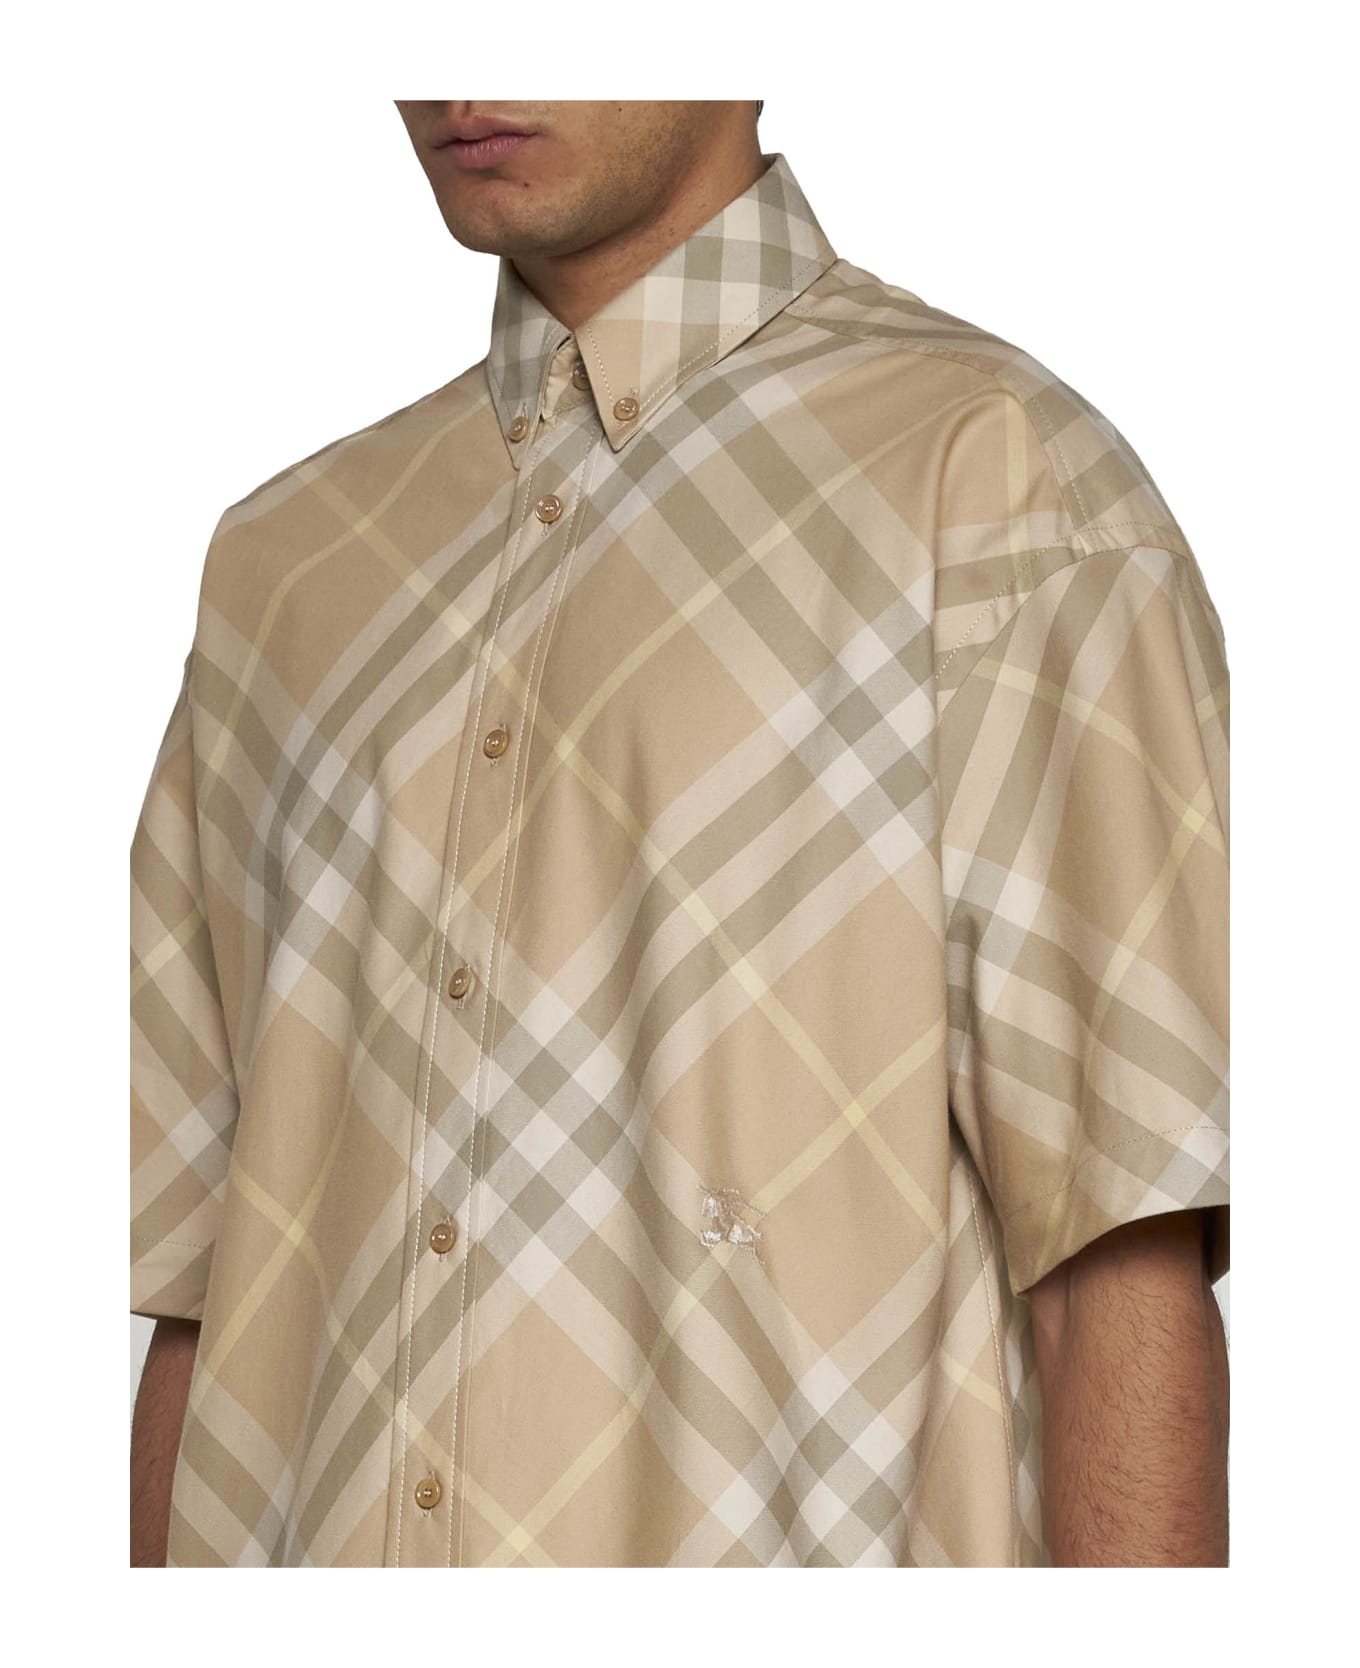 Burberry Check Motif Yellow Short Sleeves Shirt - Beige シャツ